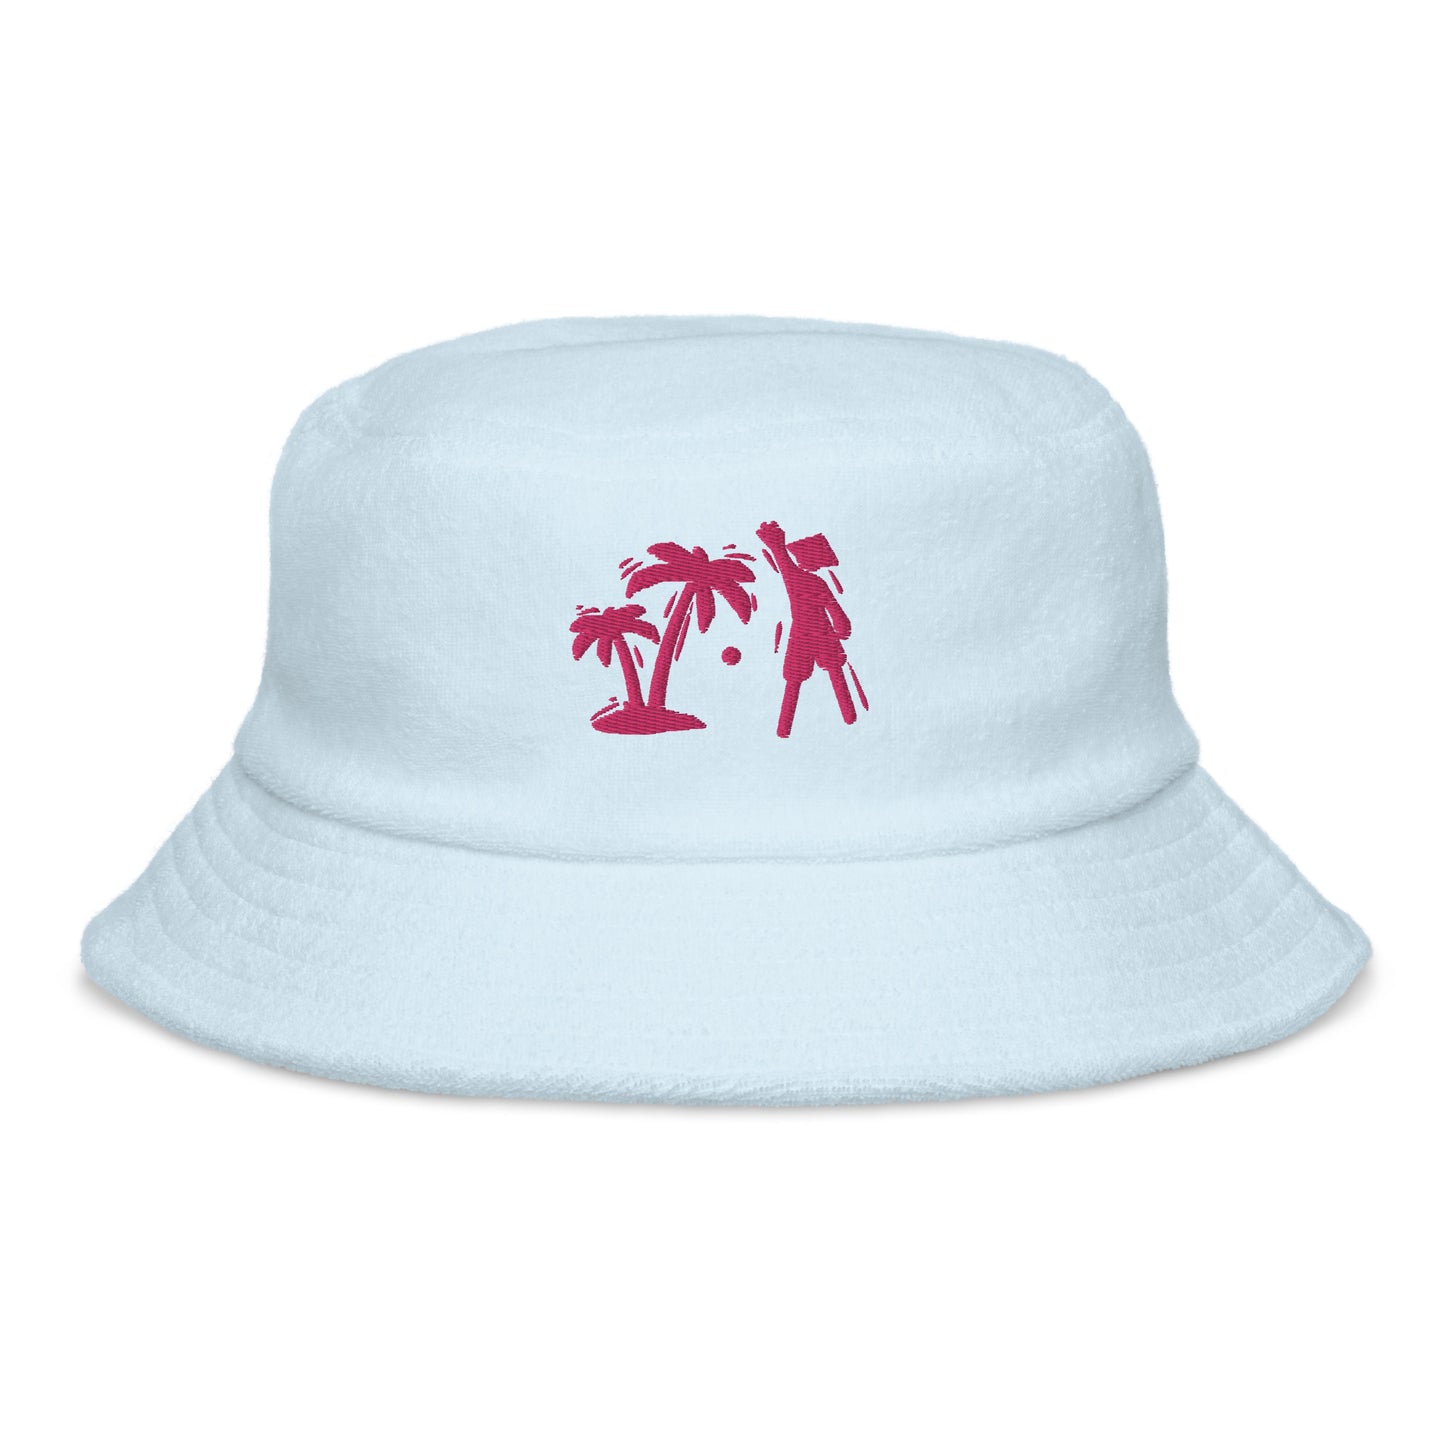 Pink VI  terry cloth bucket hat